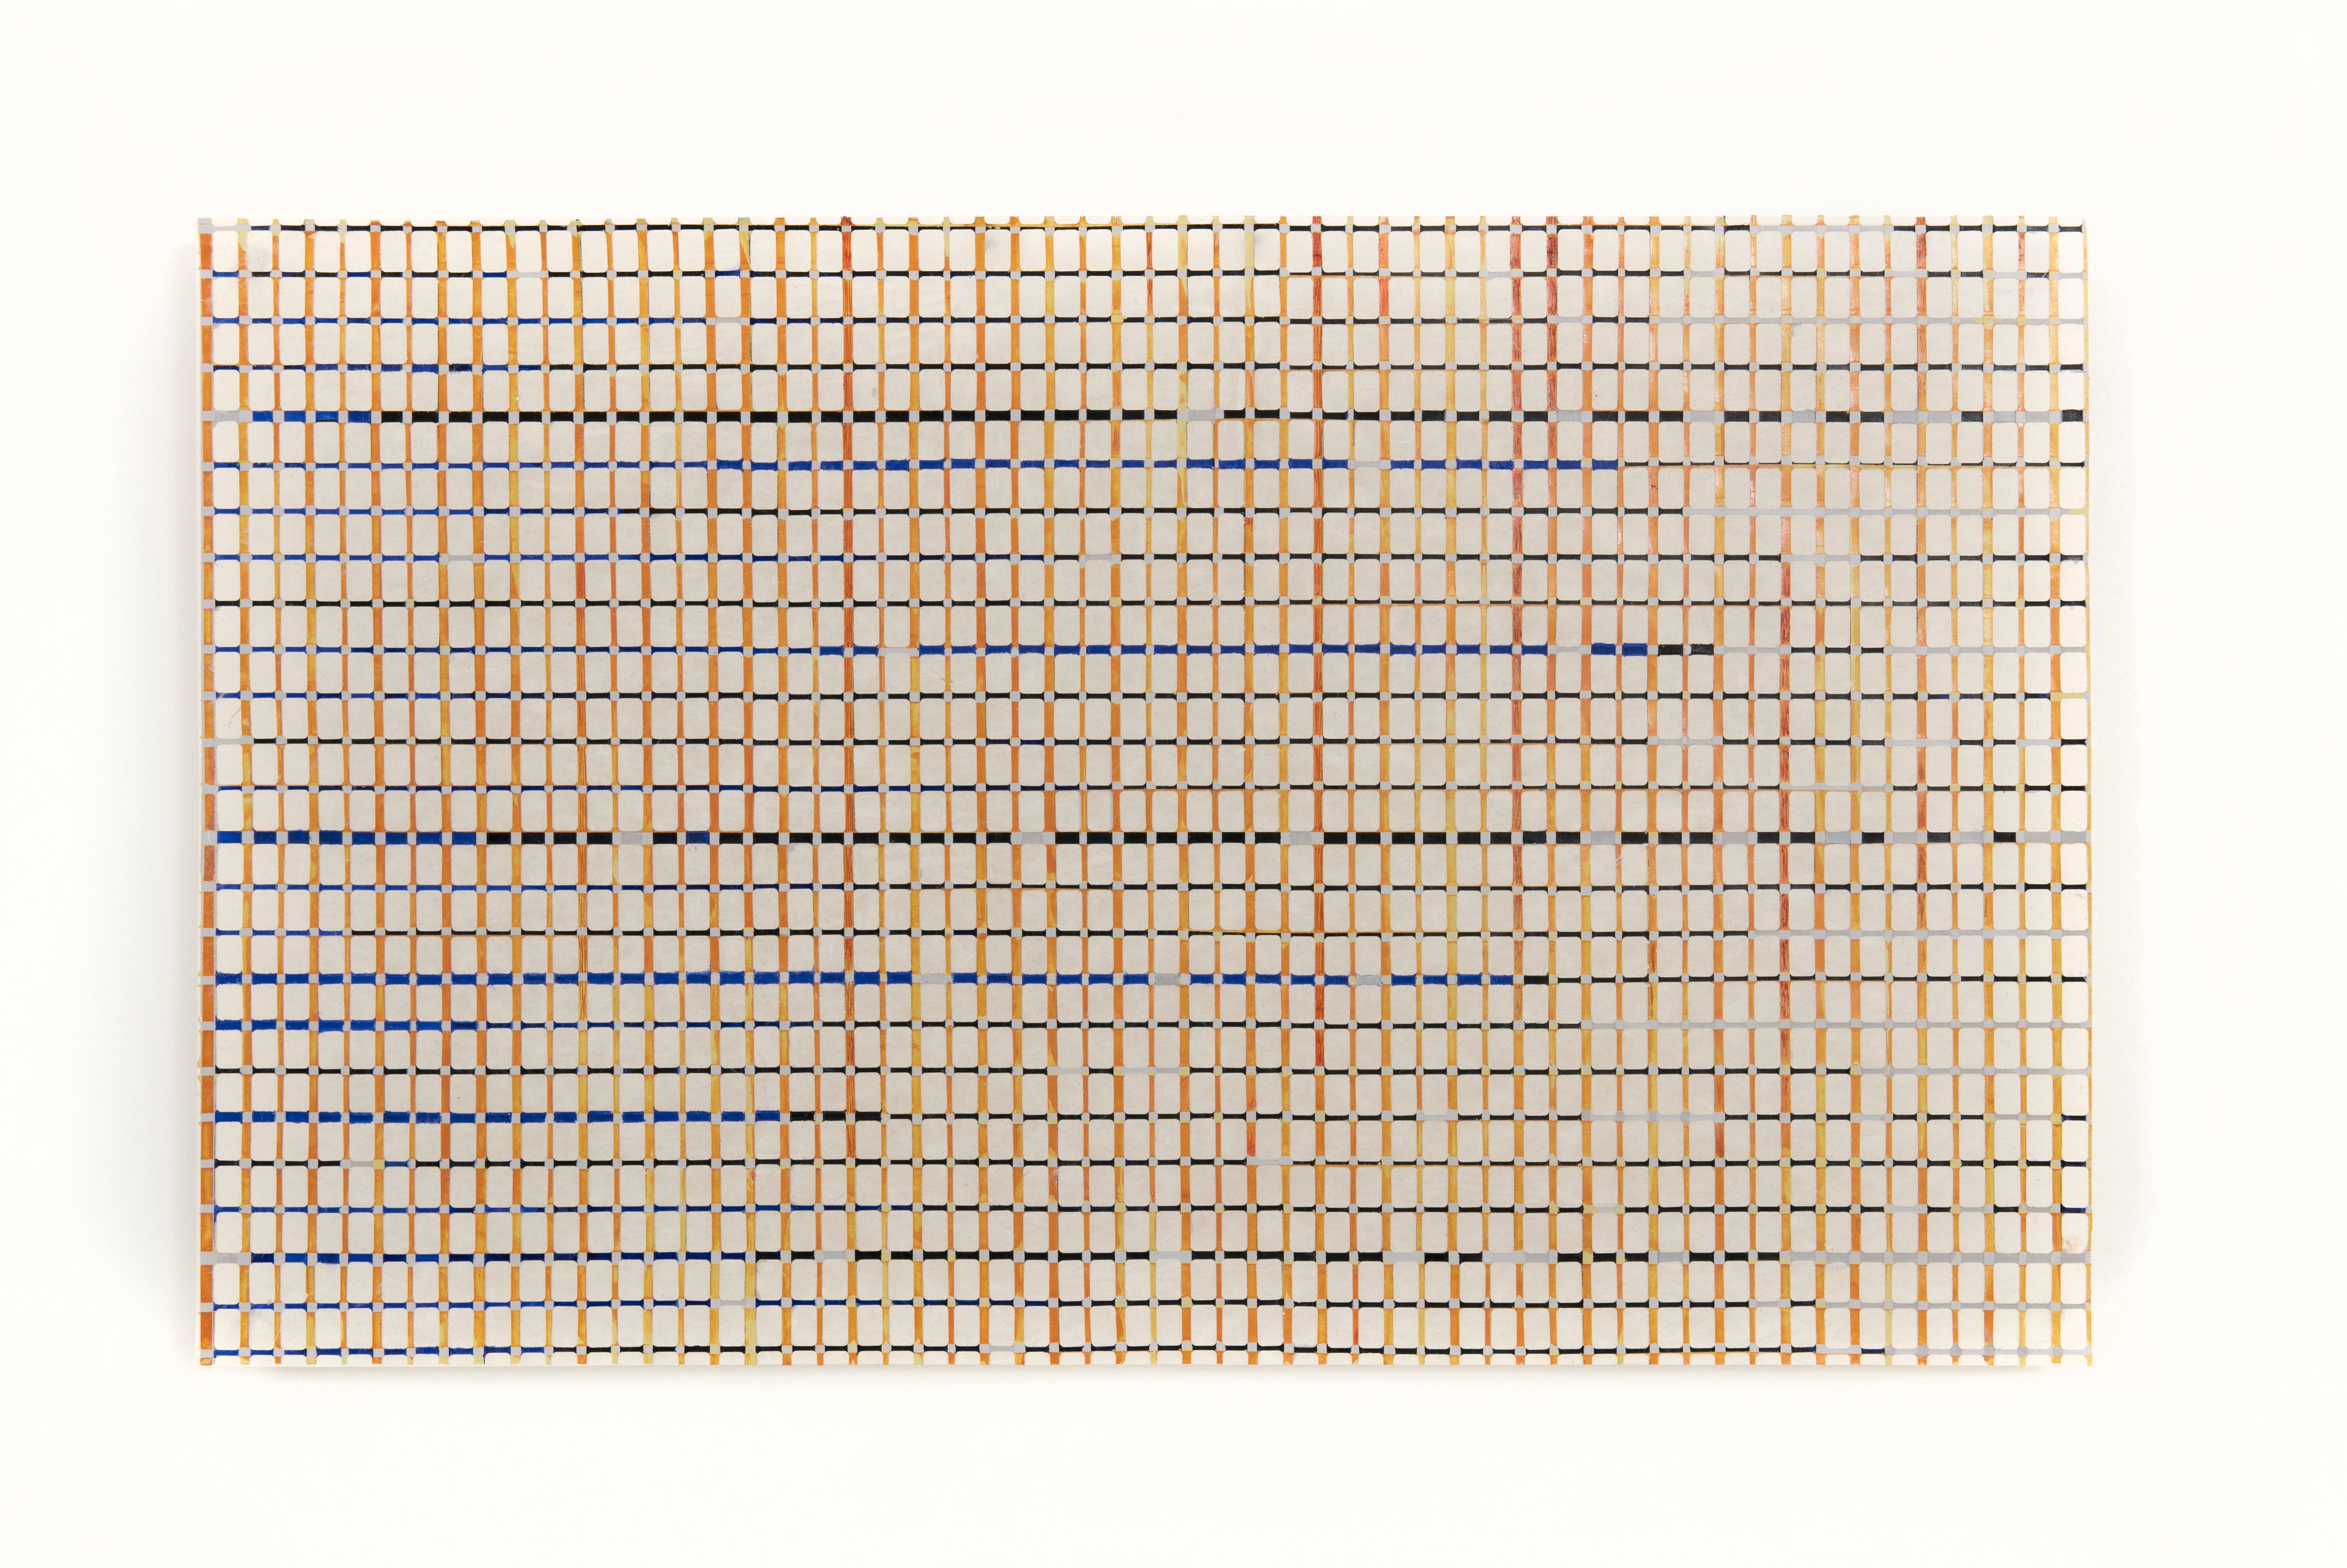 Jane Lackey, Orange/blue/black line variations 1, 2023, 14 x 23 inches, paint on kozo paper